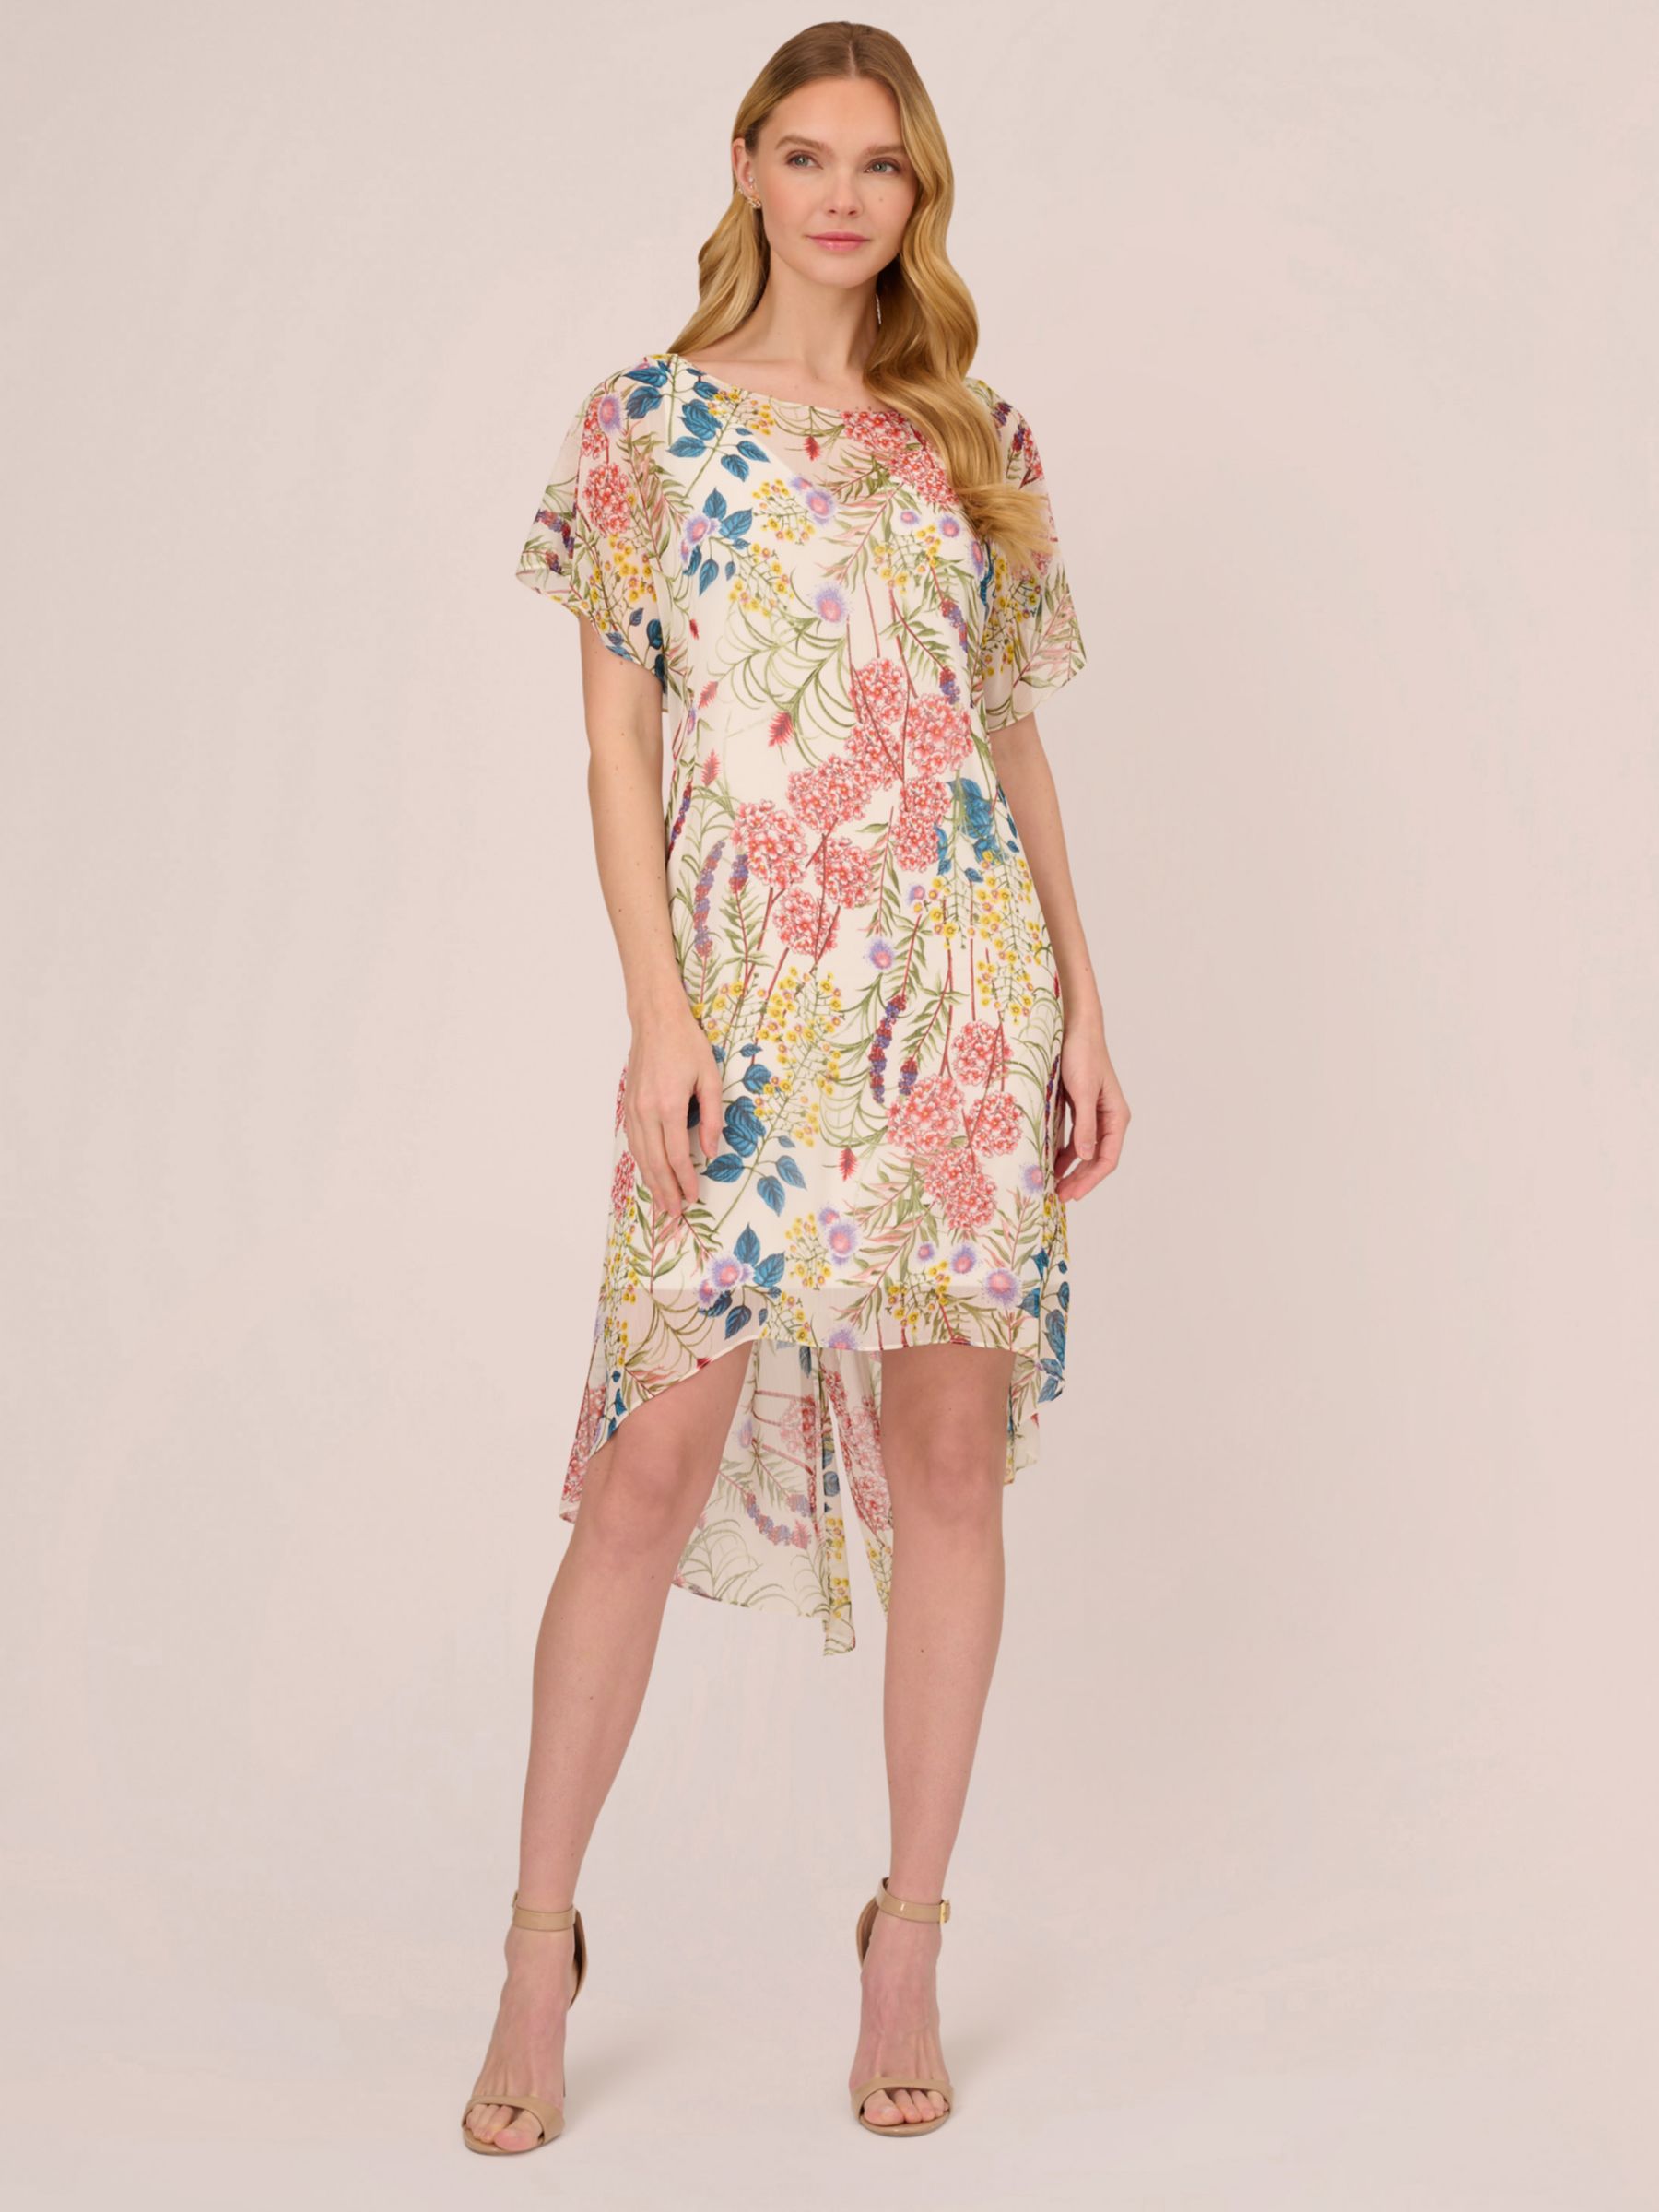 Adrianna Papell Floral Printed Chiffon Dress, Cream/Multi, XS